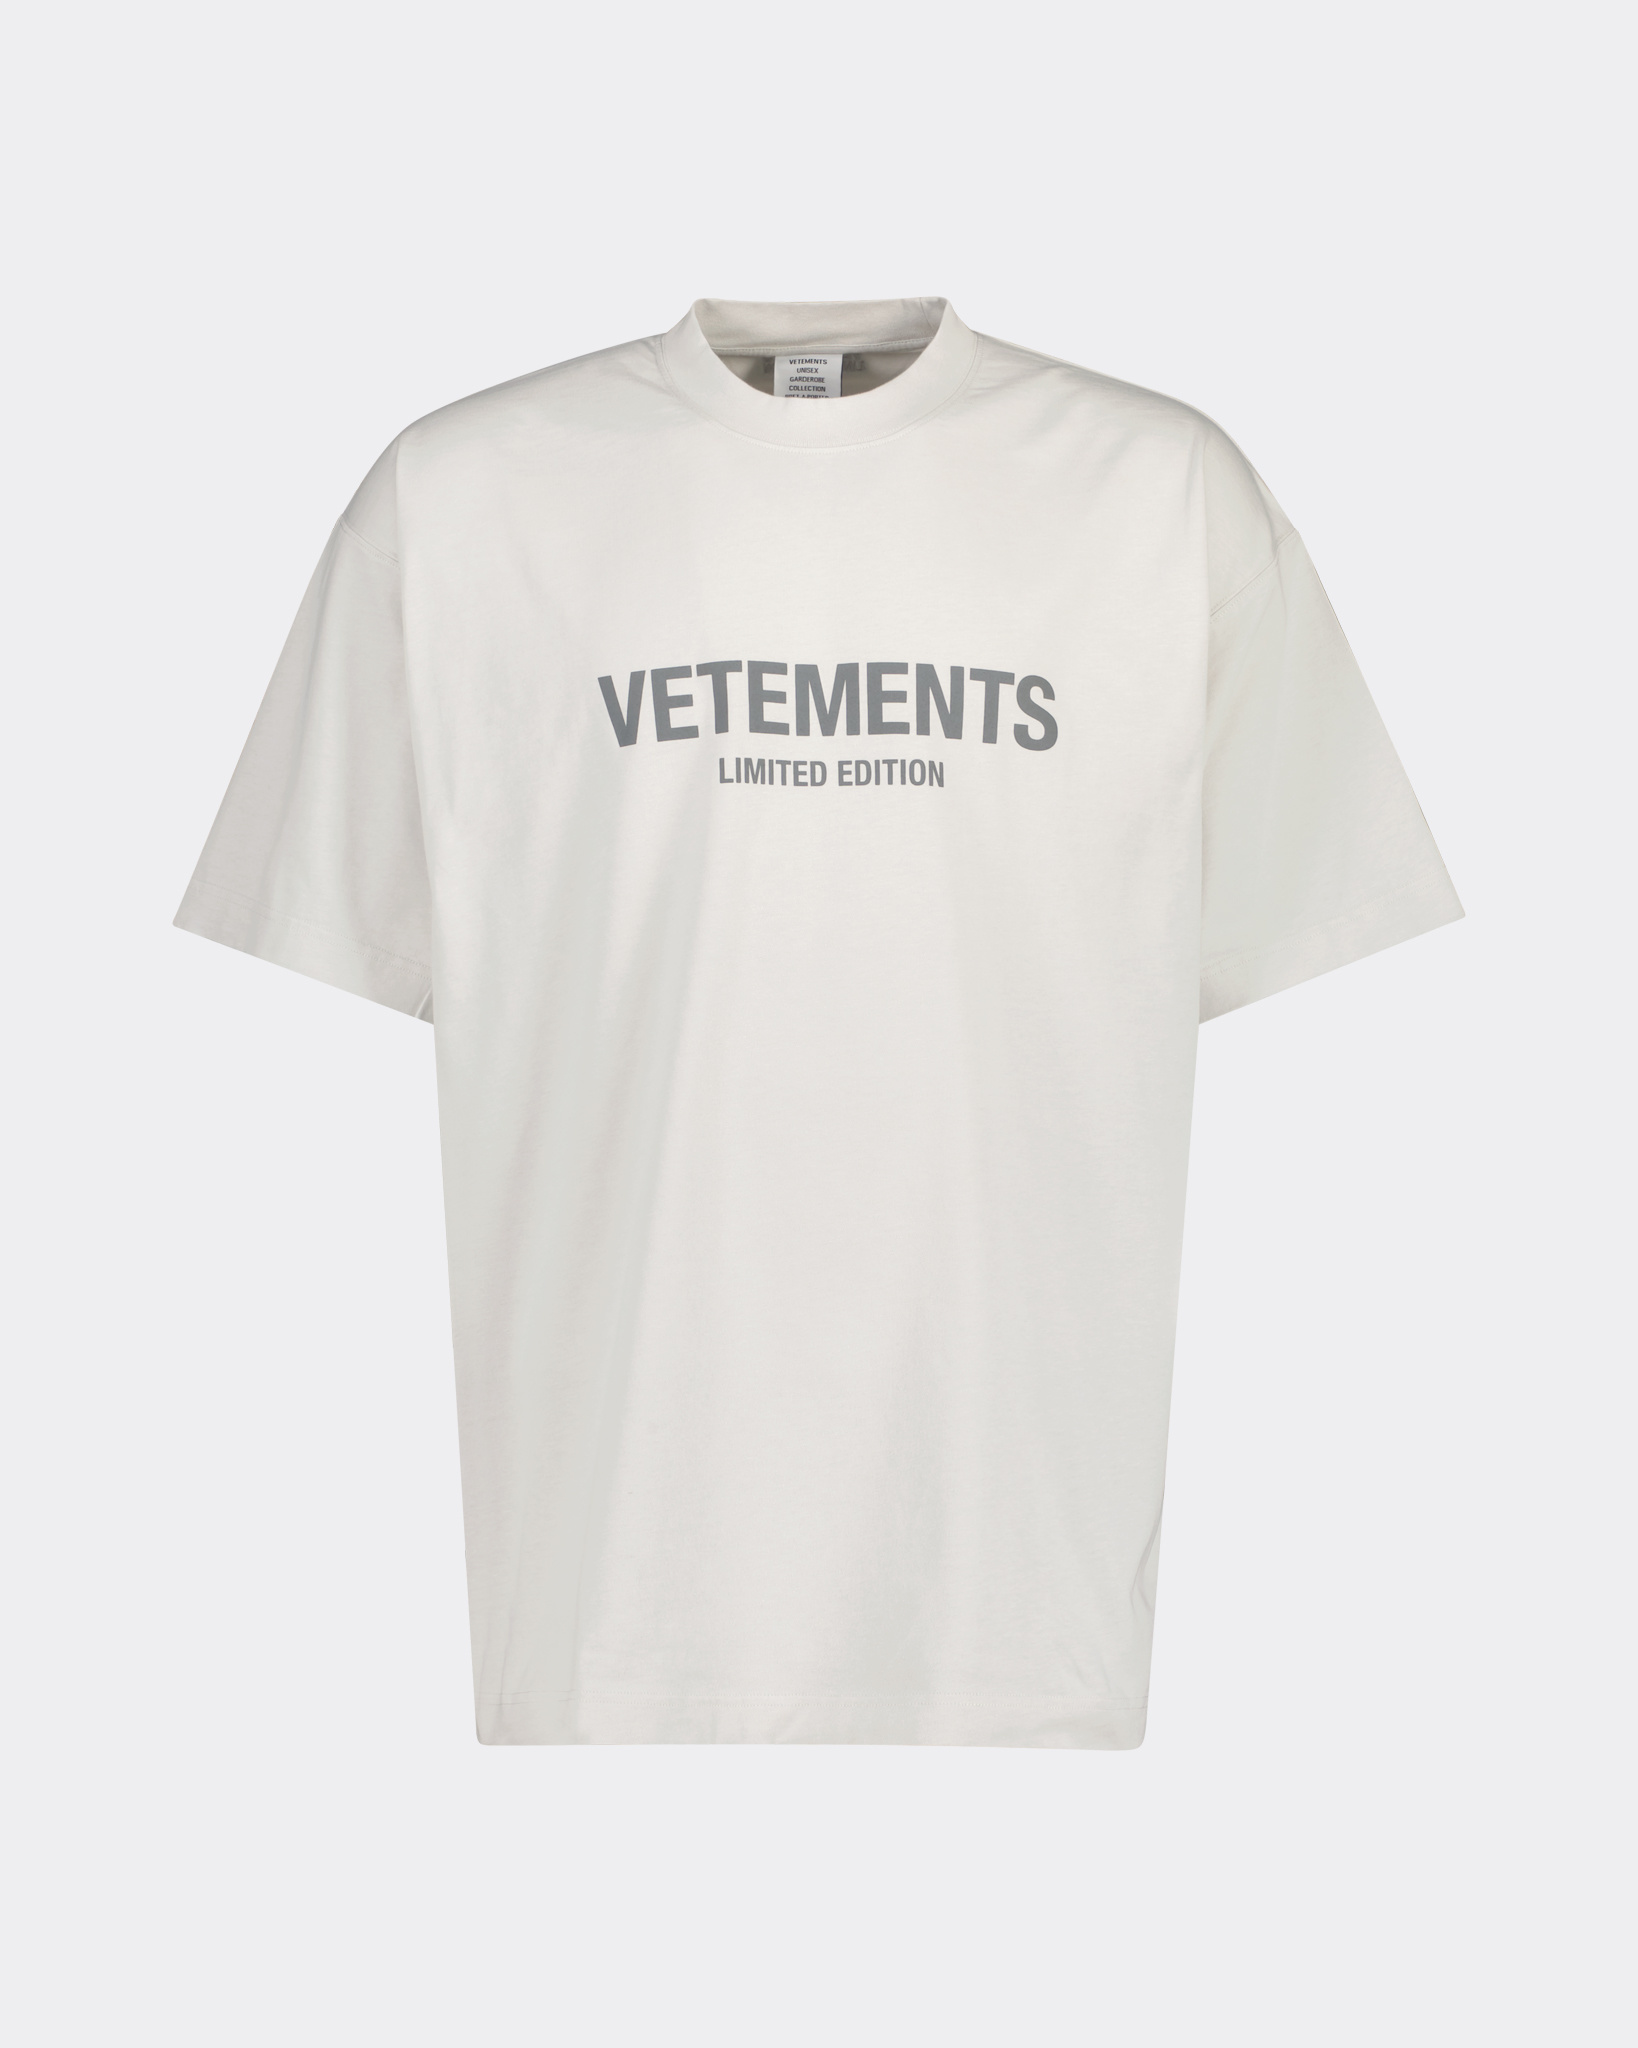 Vetements Logo Limited Edition T-Shirt White - Beachim